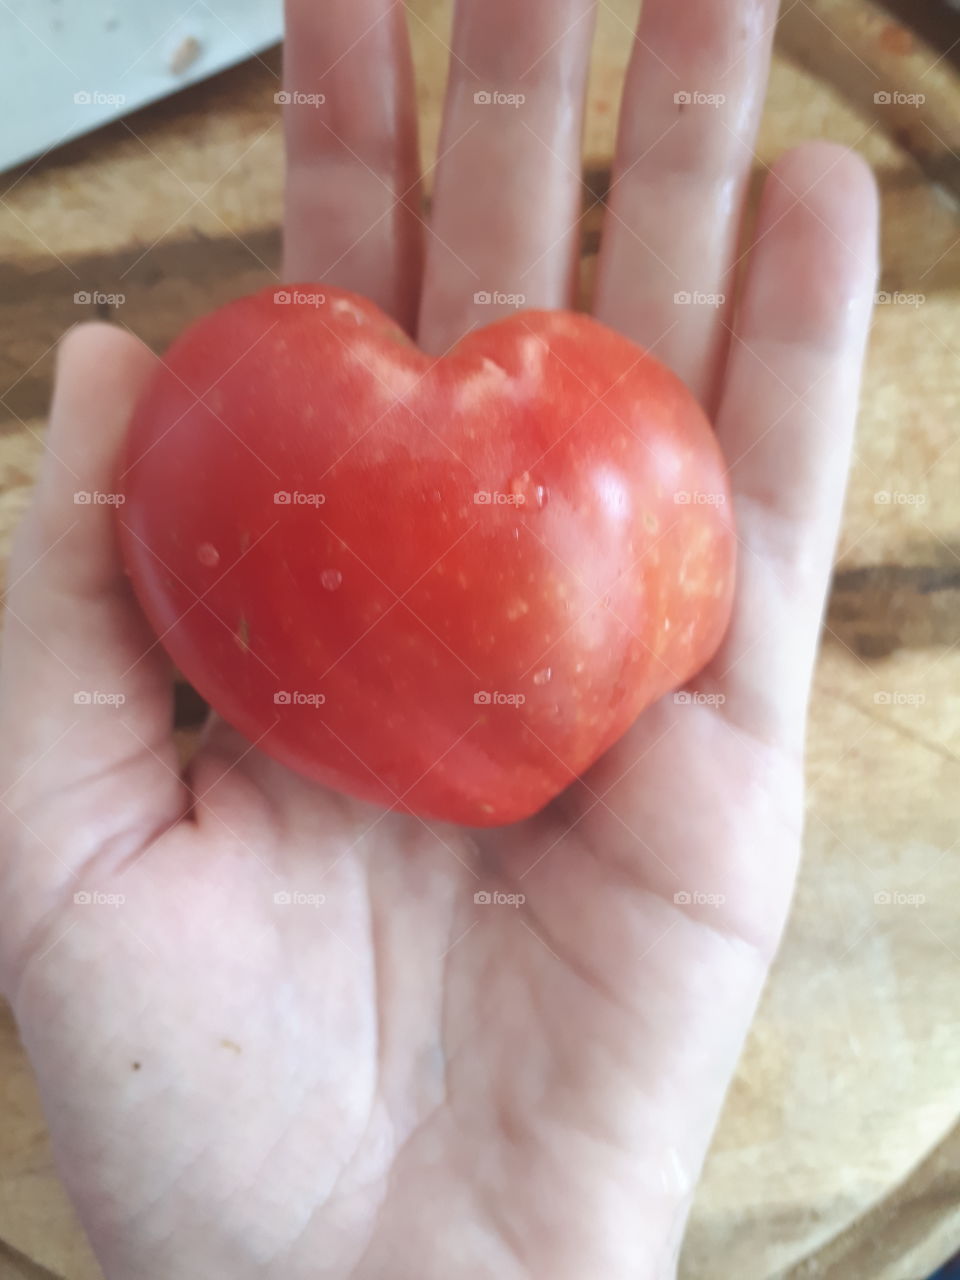 my lovely tomato in shape of heart